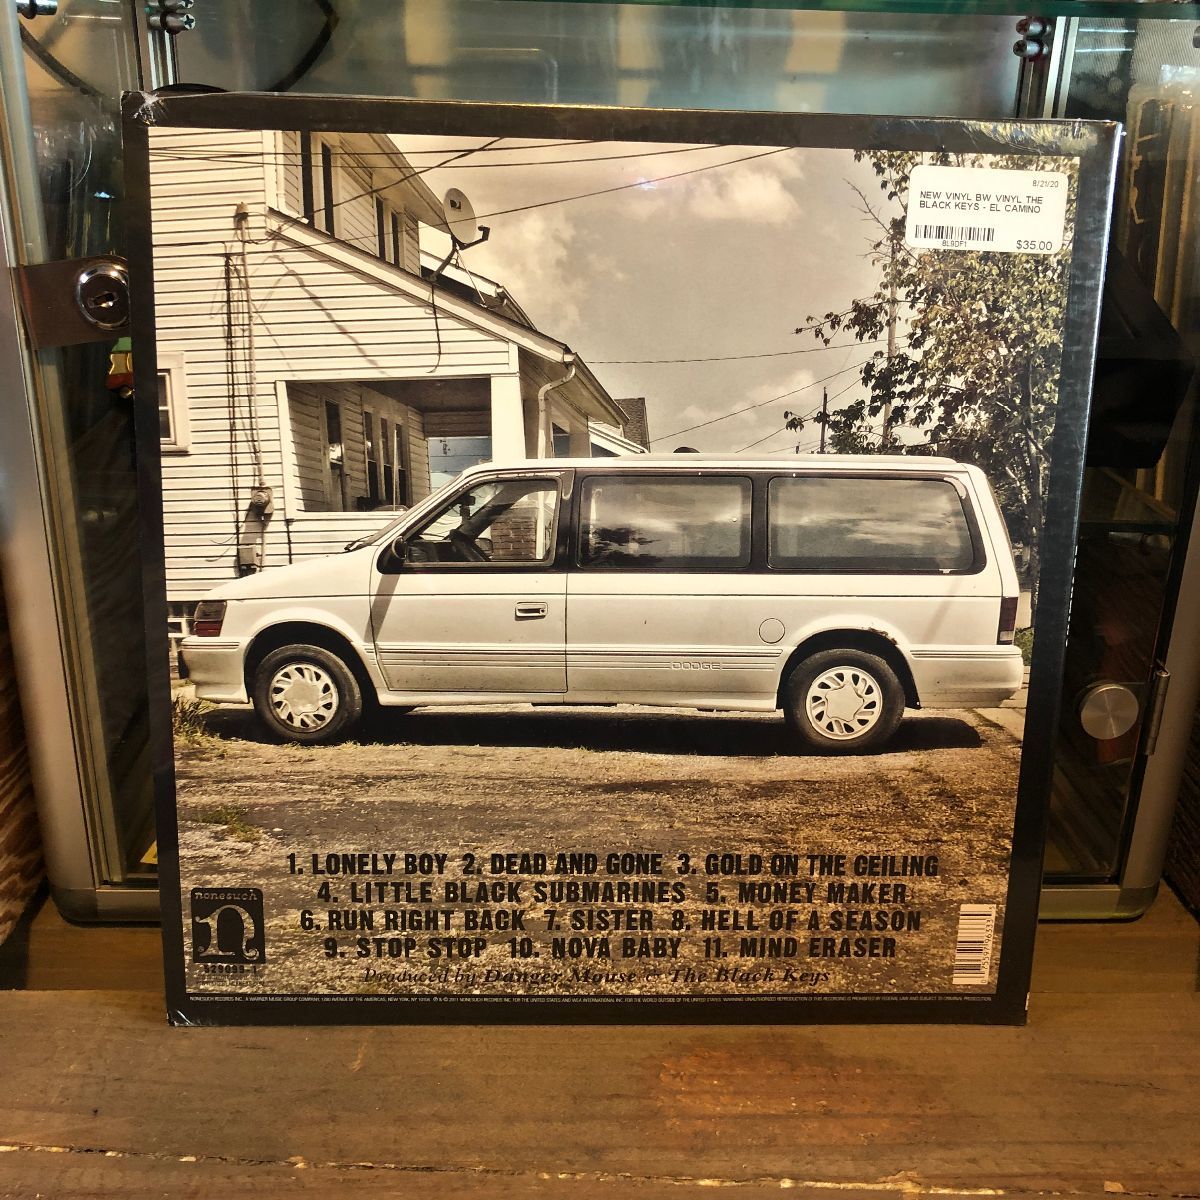 The Black Keys – El Camino Vinyl Record